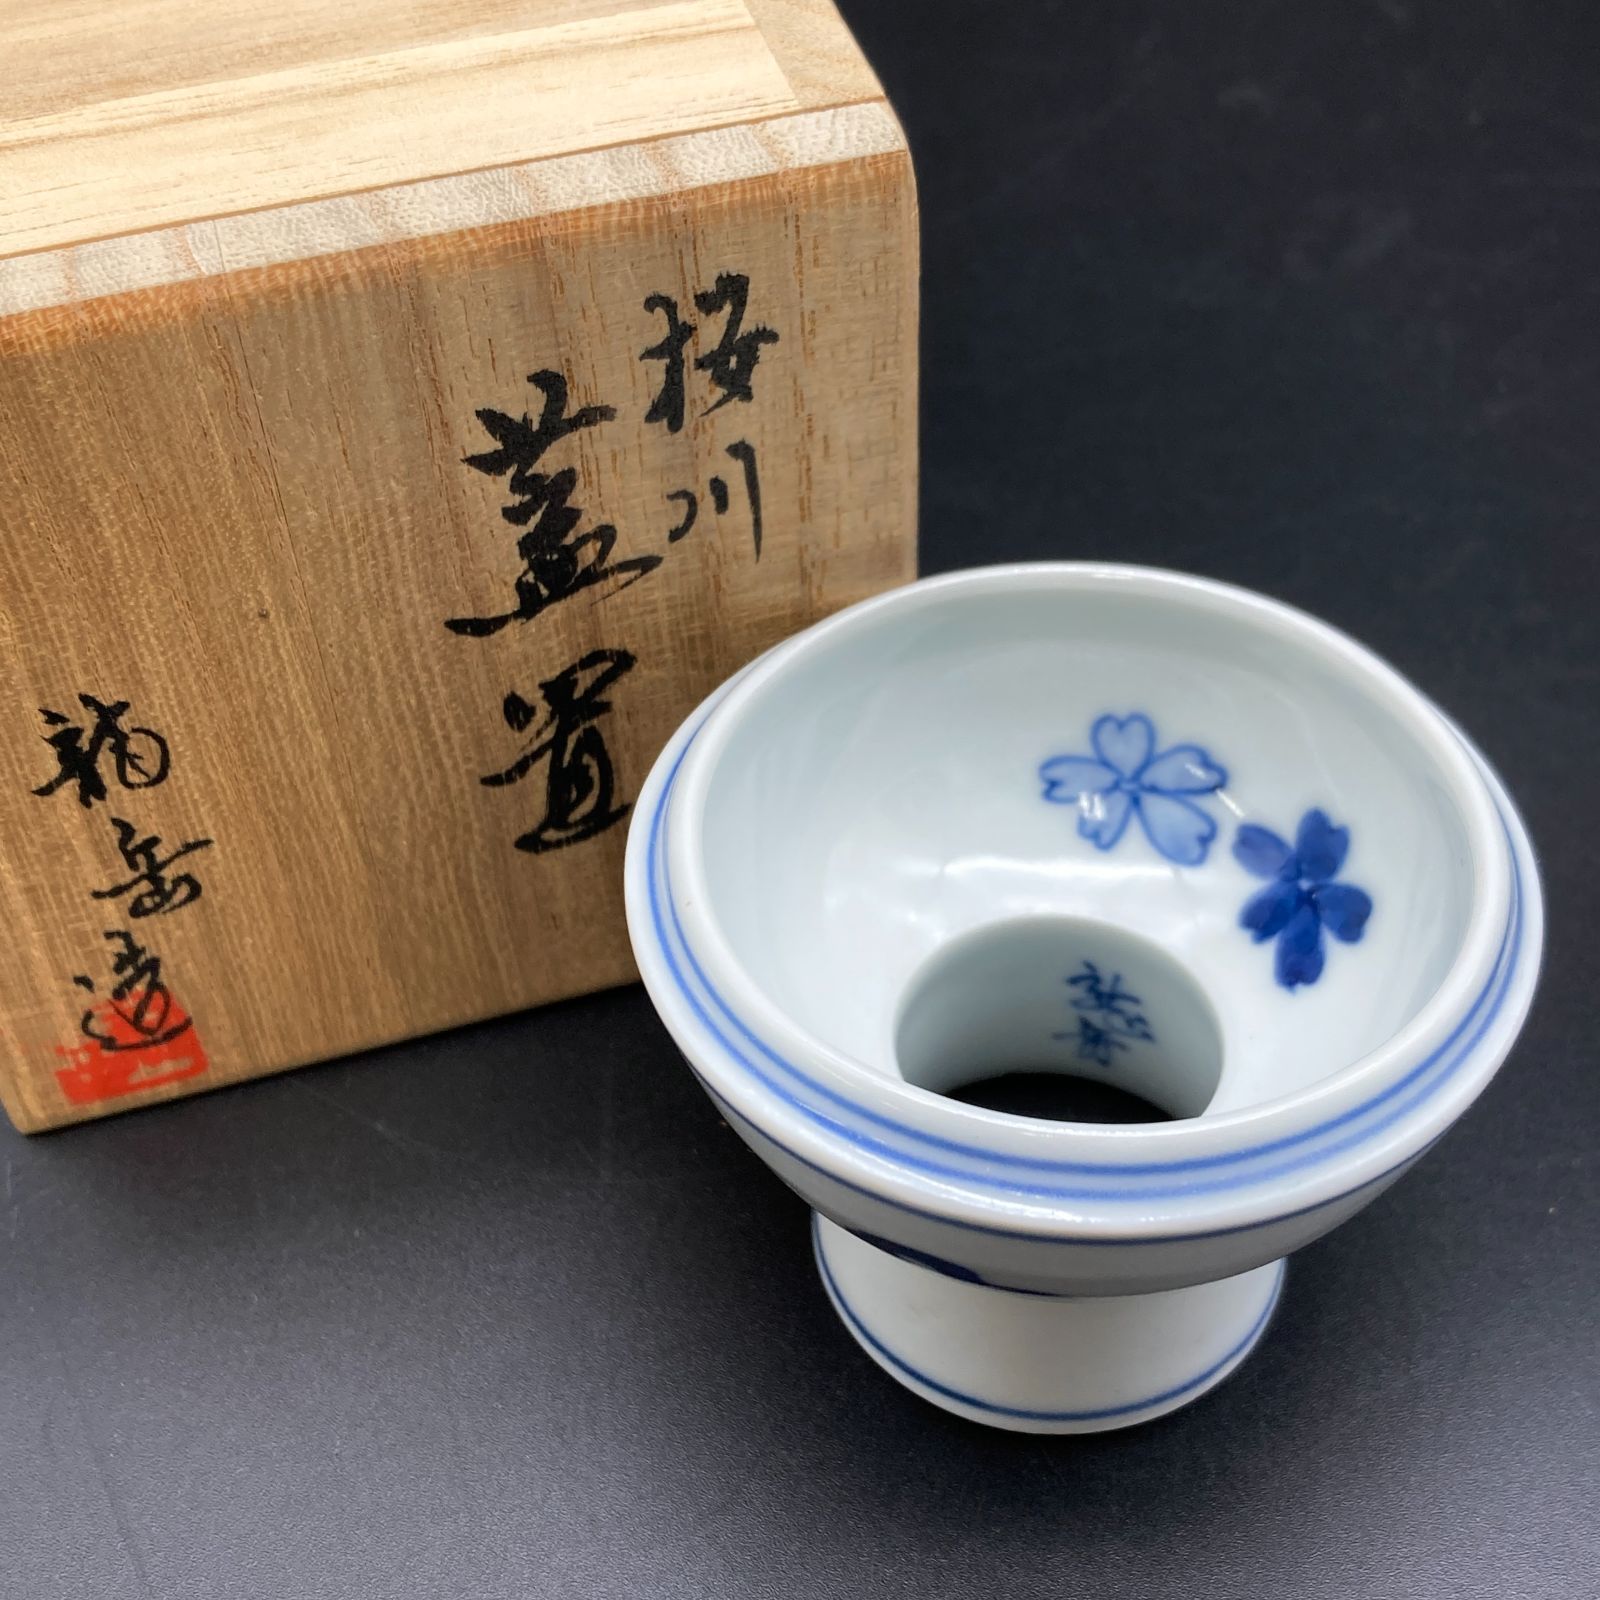 Ｍ２８８ 茶碗 『京焼』『中村能久造』『金彩水仙文』『緑釉茶碗』 共 